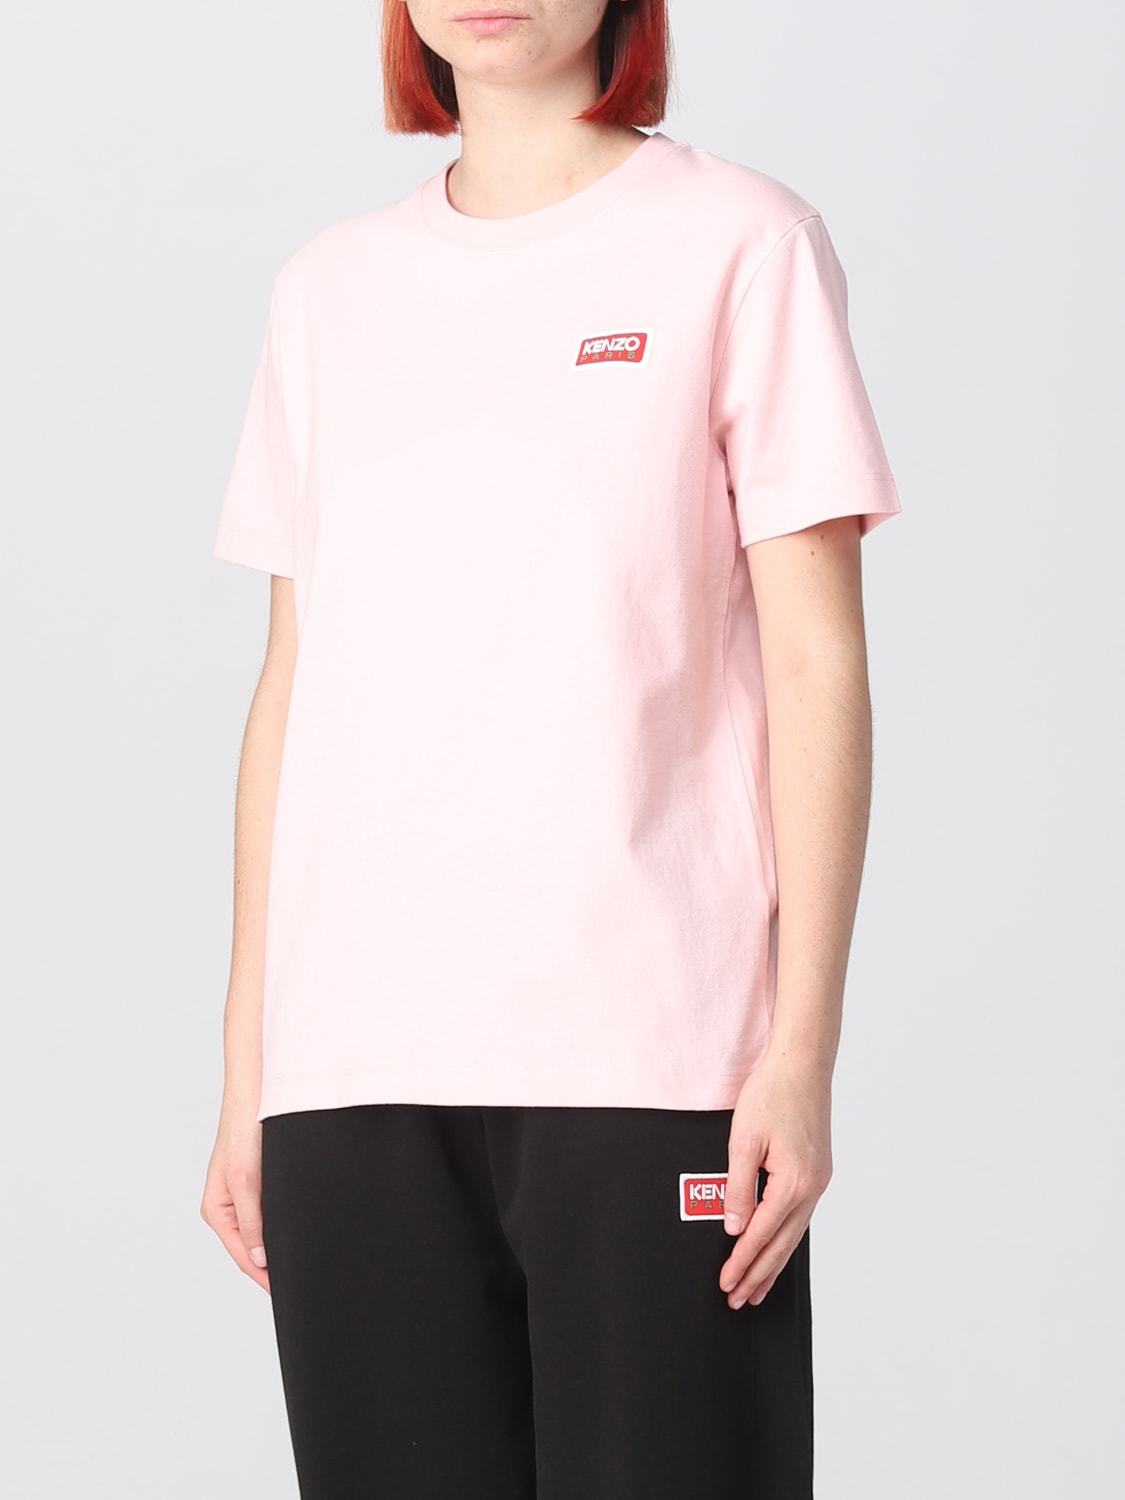 KENZO: cotton t-shirt - Pink | KENZO t-shirt FD62TS0594SY online at ...